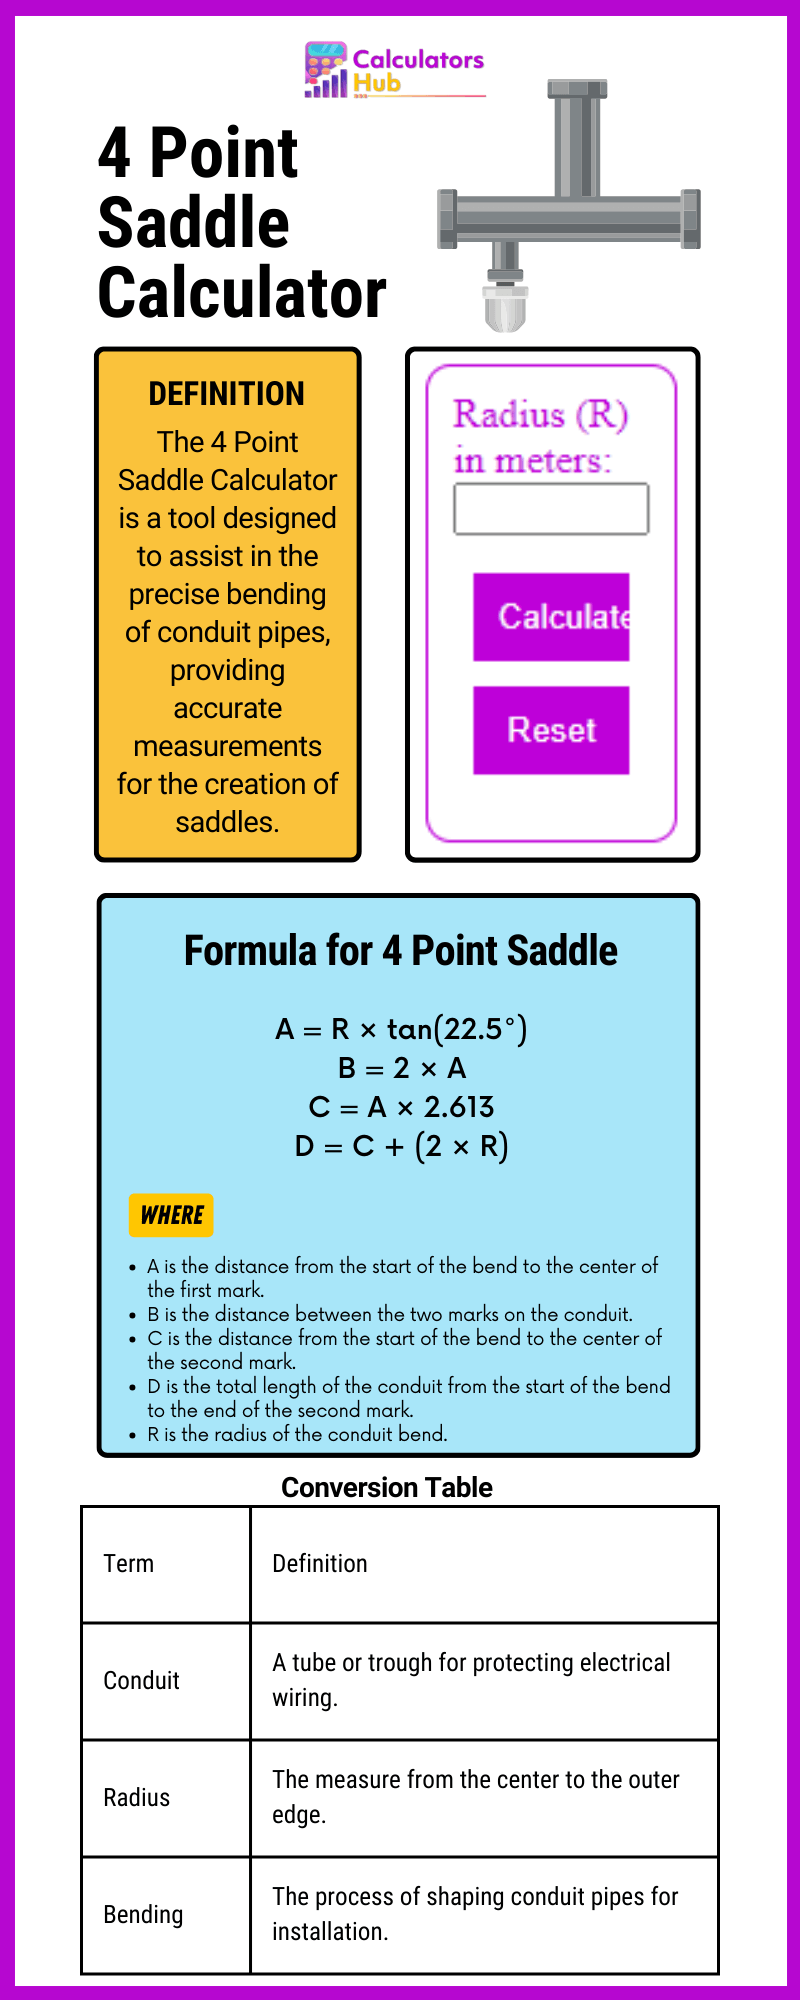 4 Point Saddle Calculator